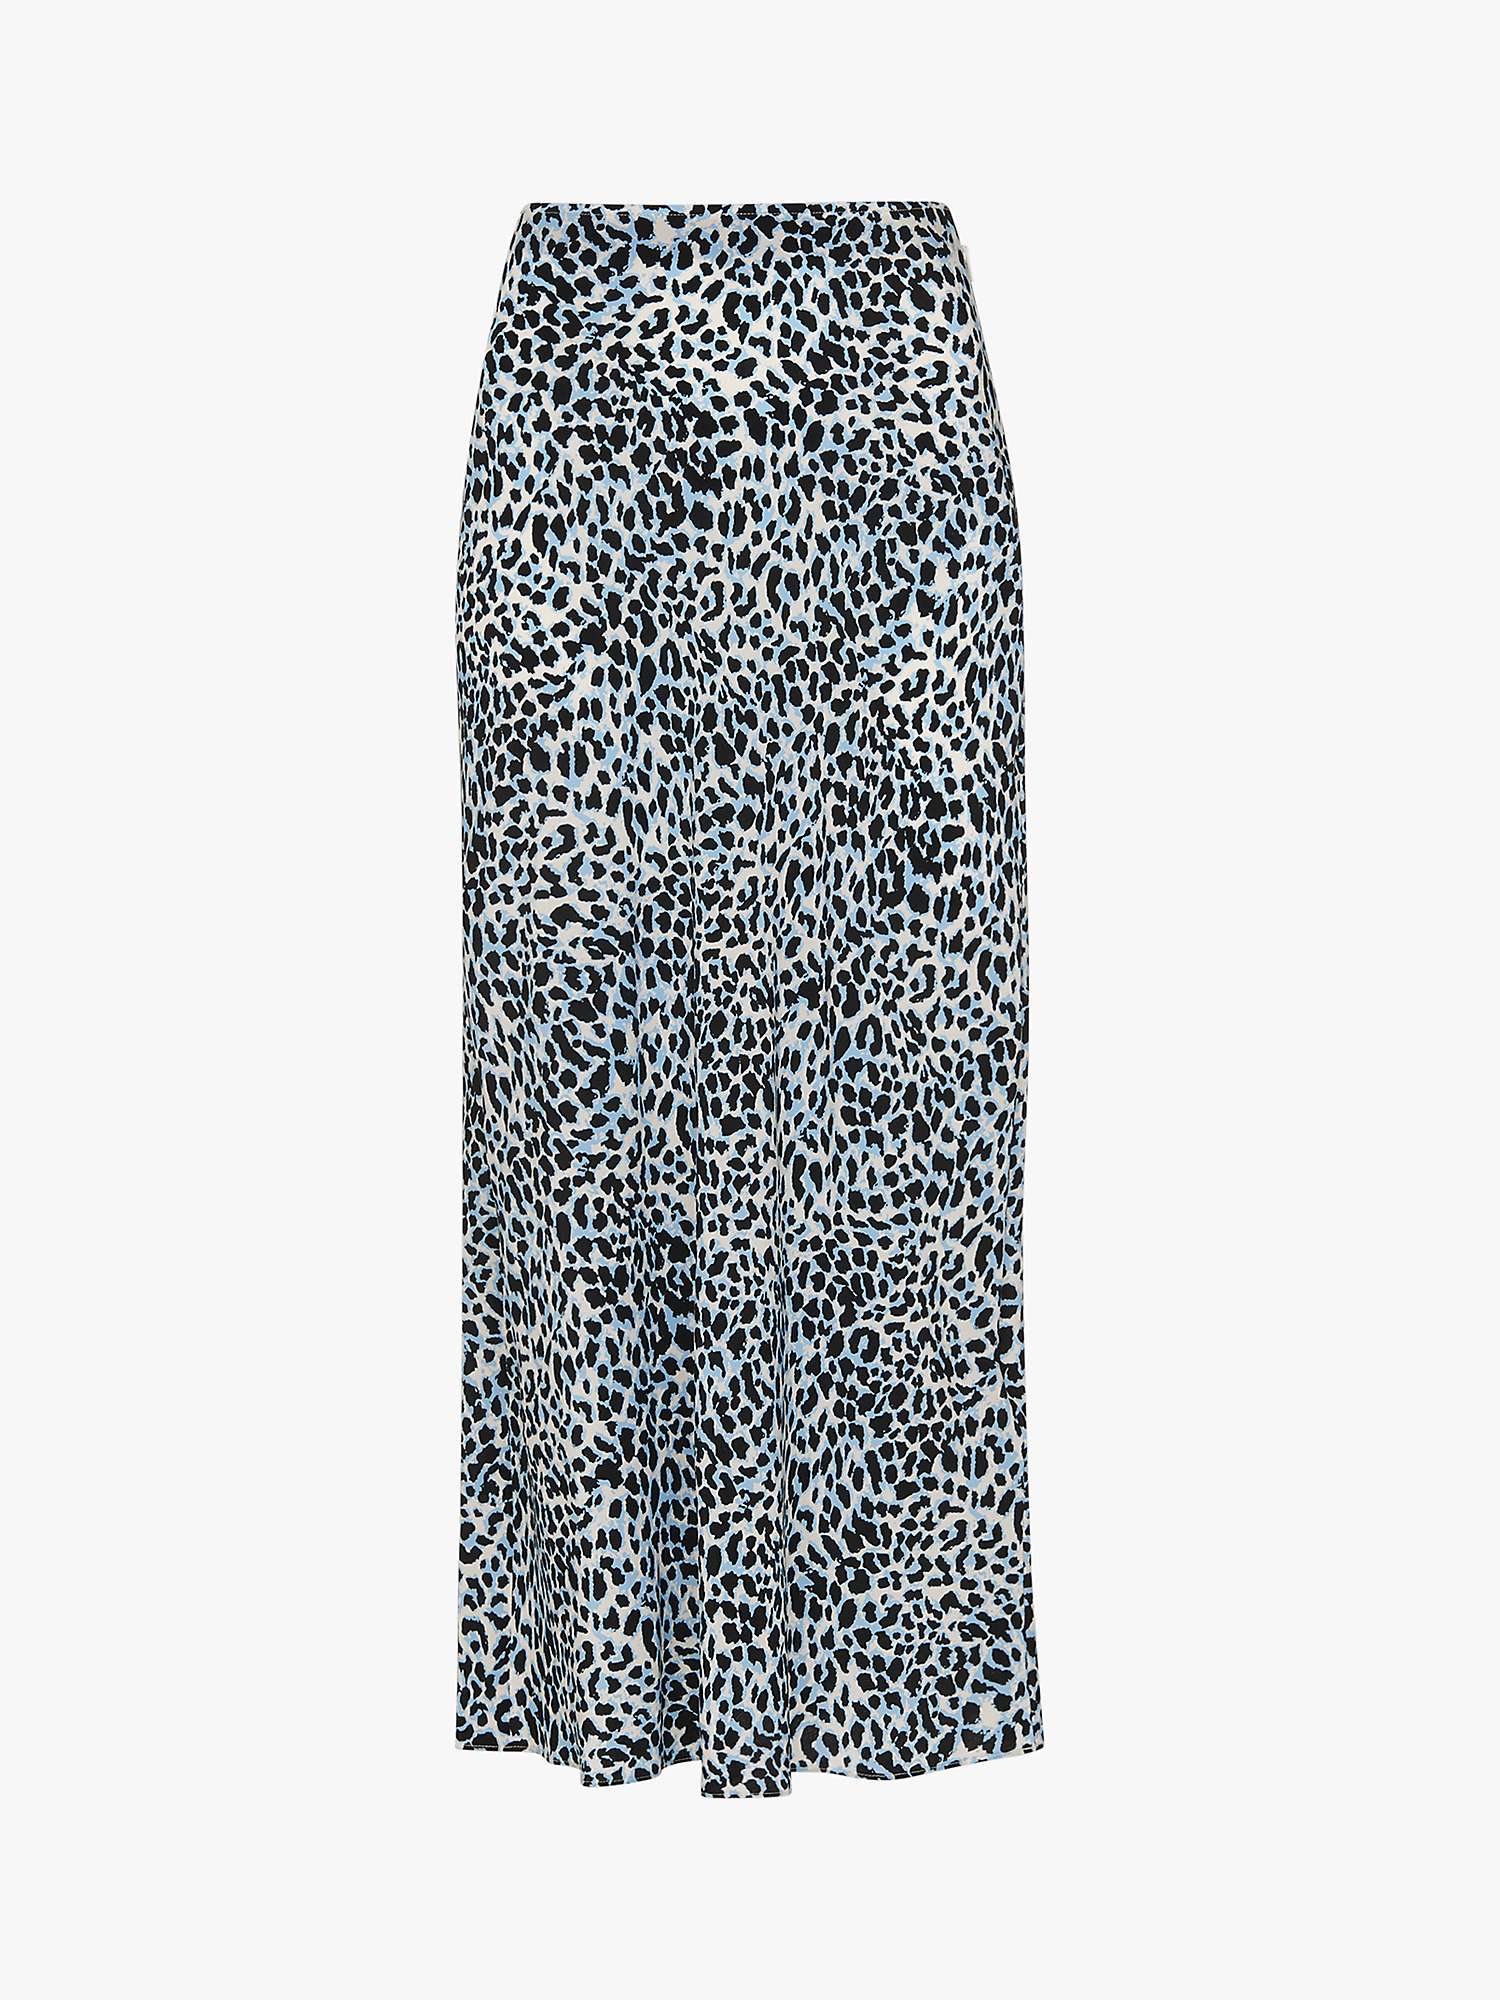 Buy Whistles Abstract Cheetah Silk Slip Skirt, Blue/Multi Online at johnlewis.com